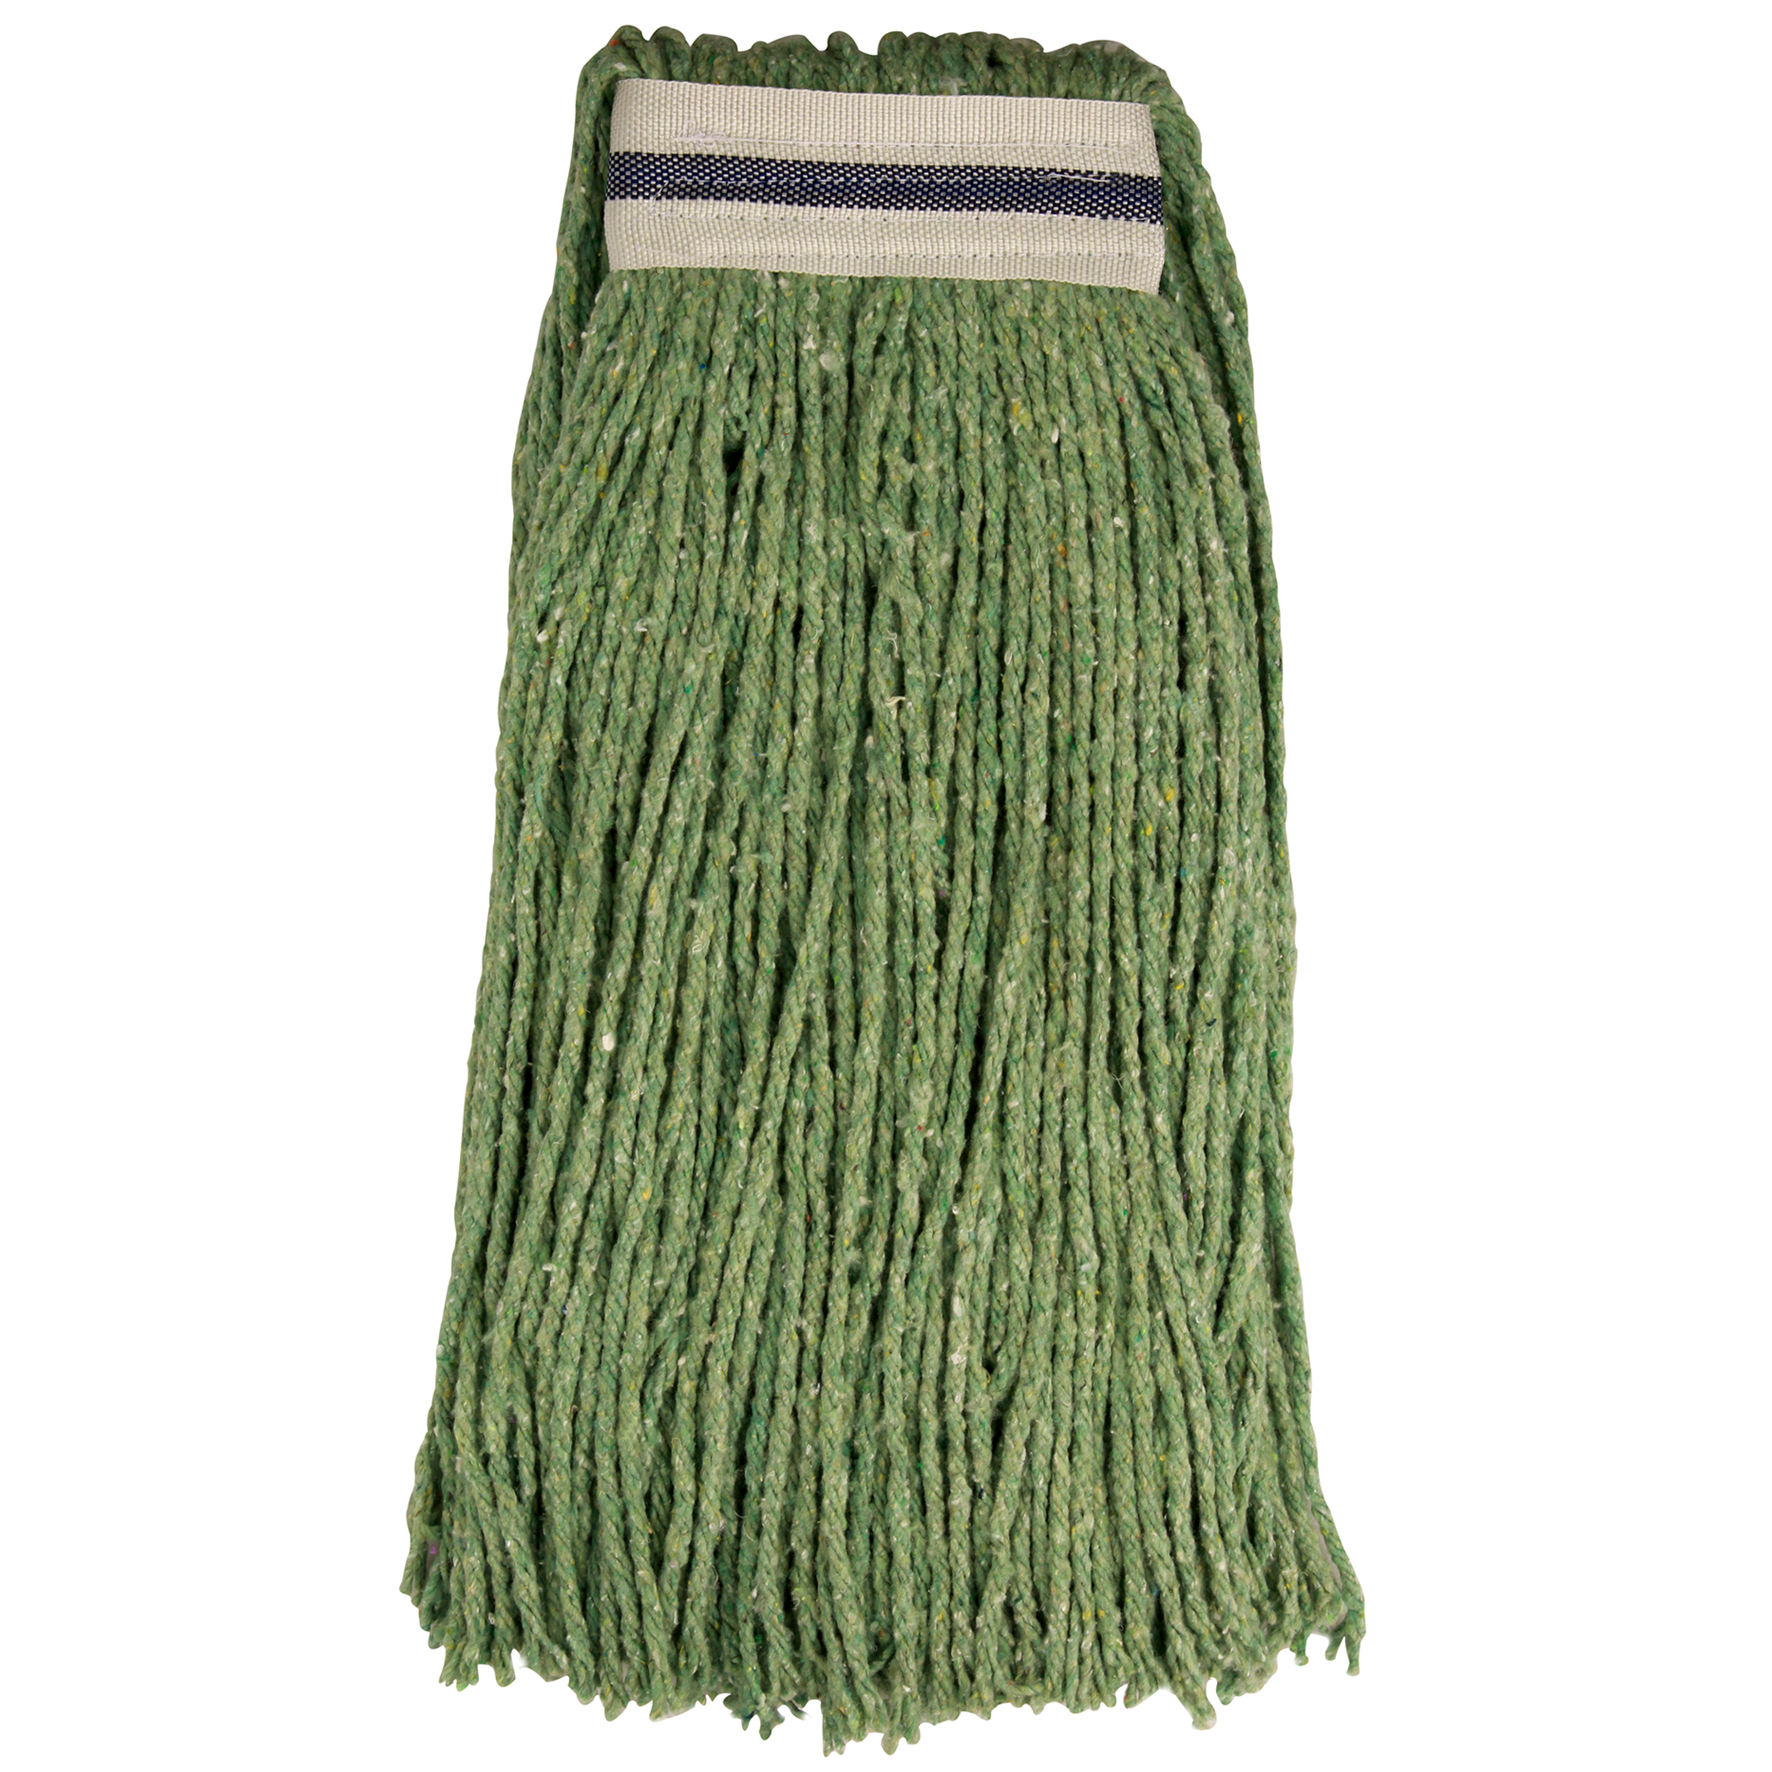 Professional cotton yarn mop 400 gr